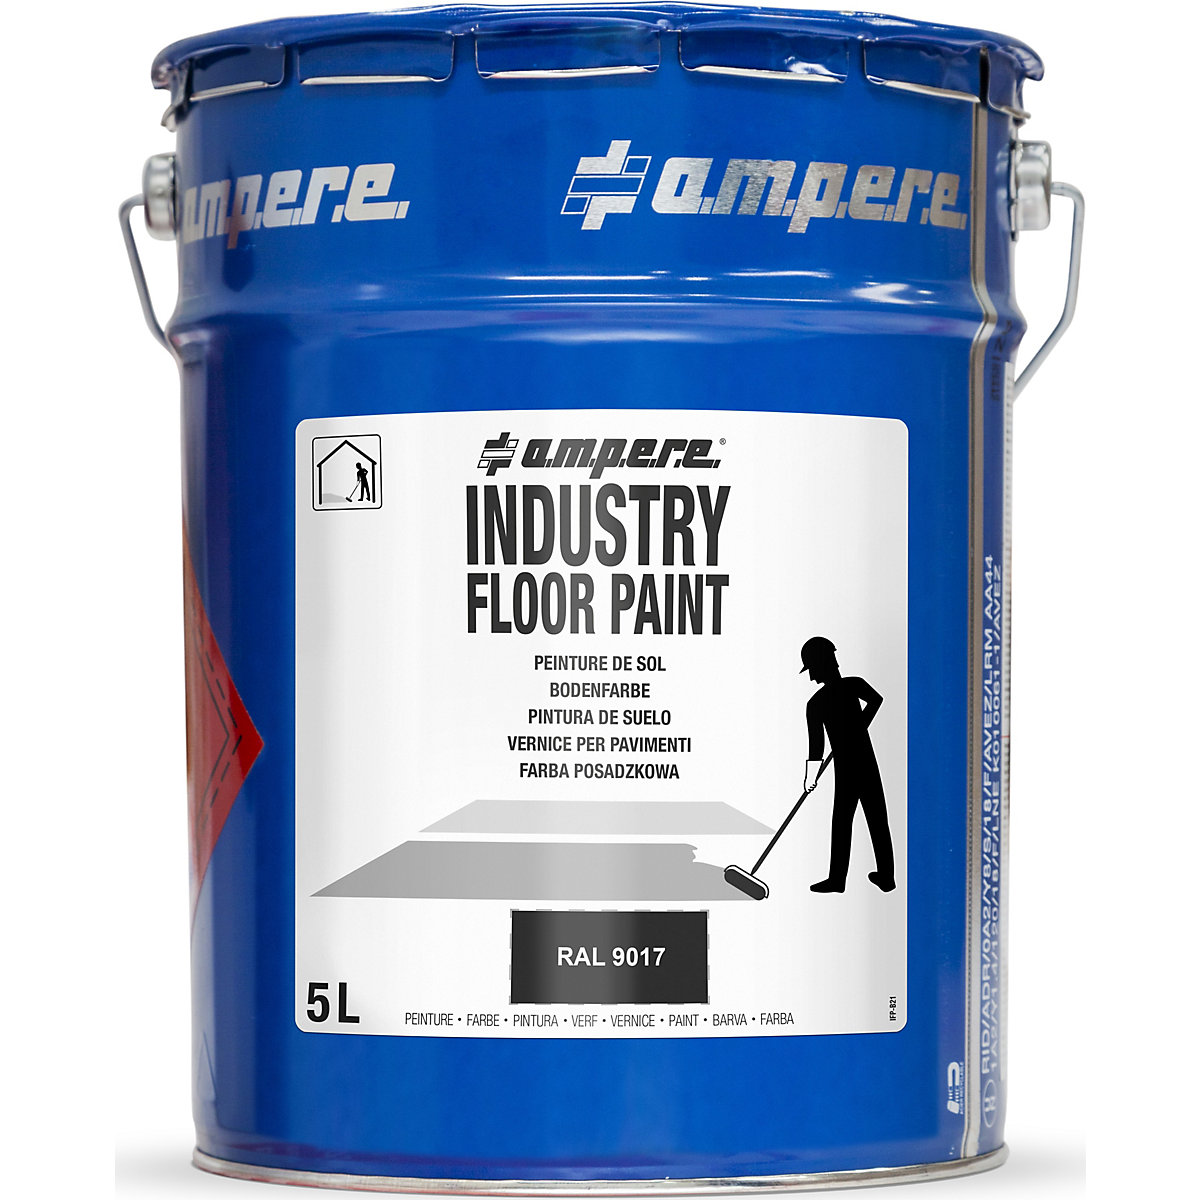 Vernice per pavimenti Industry Floor Paint® - Ampere